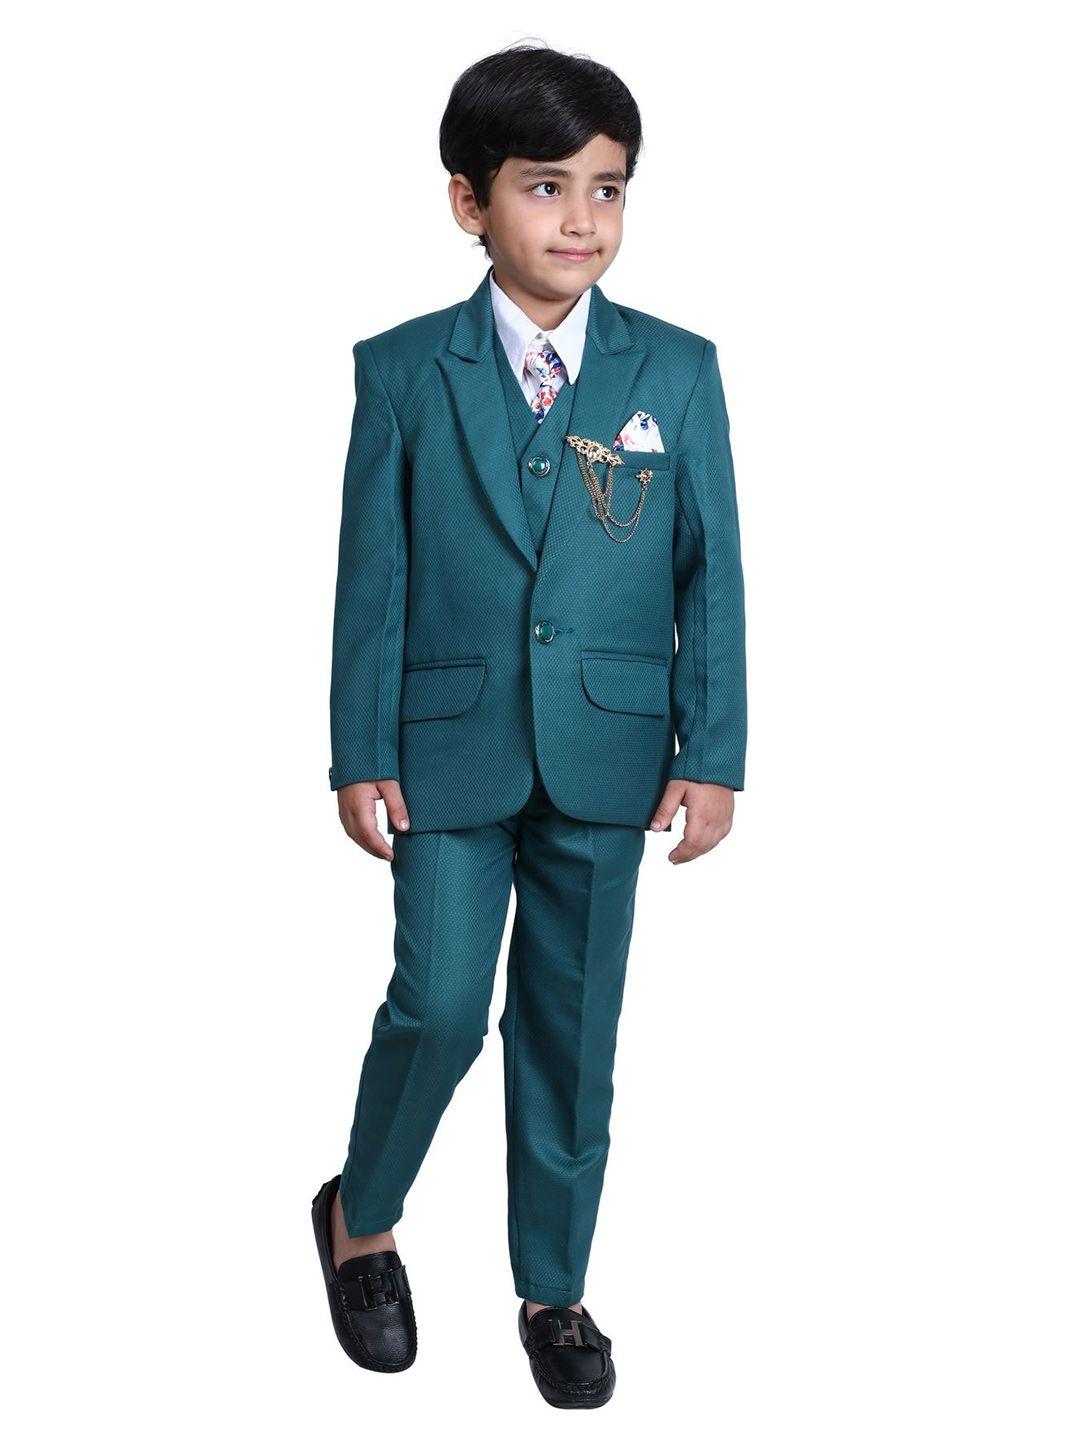 dkgf fashion boys green & white 5-piece suit